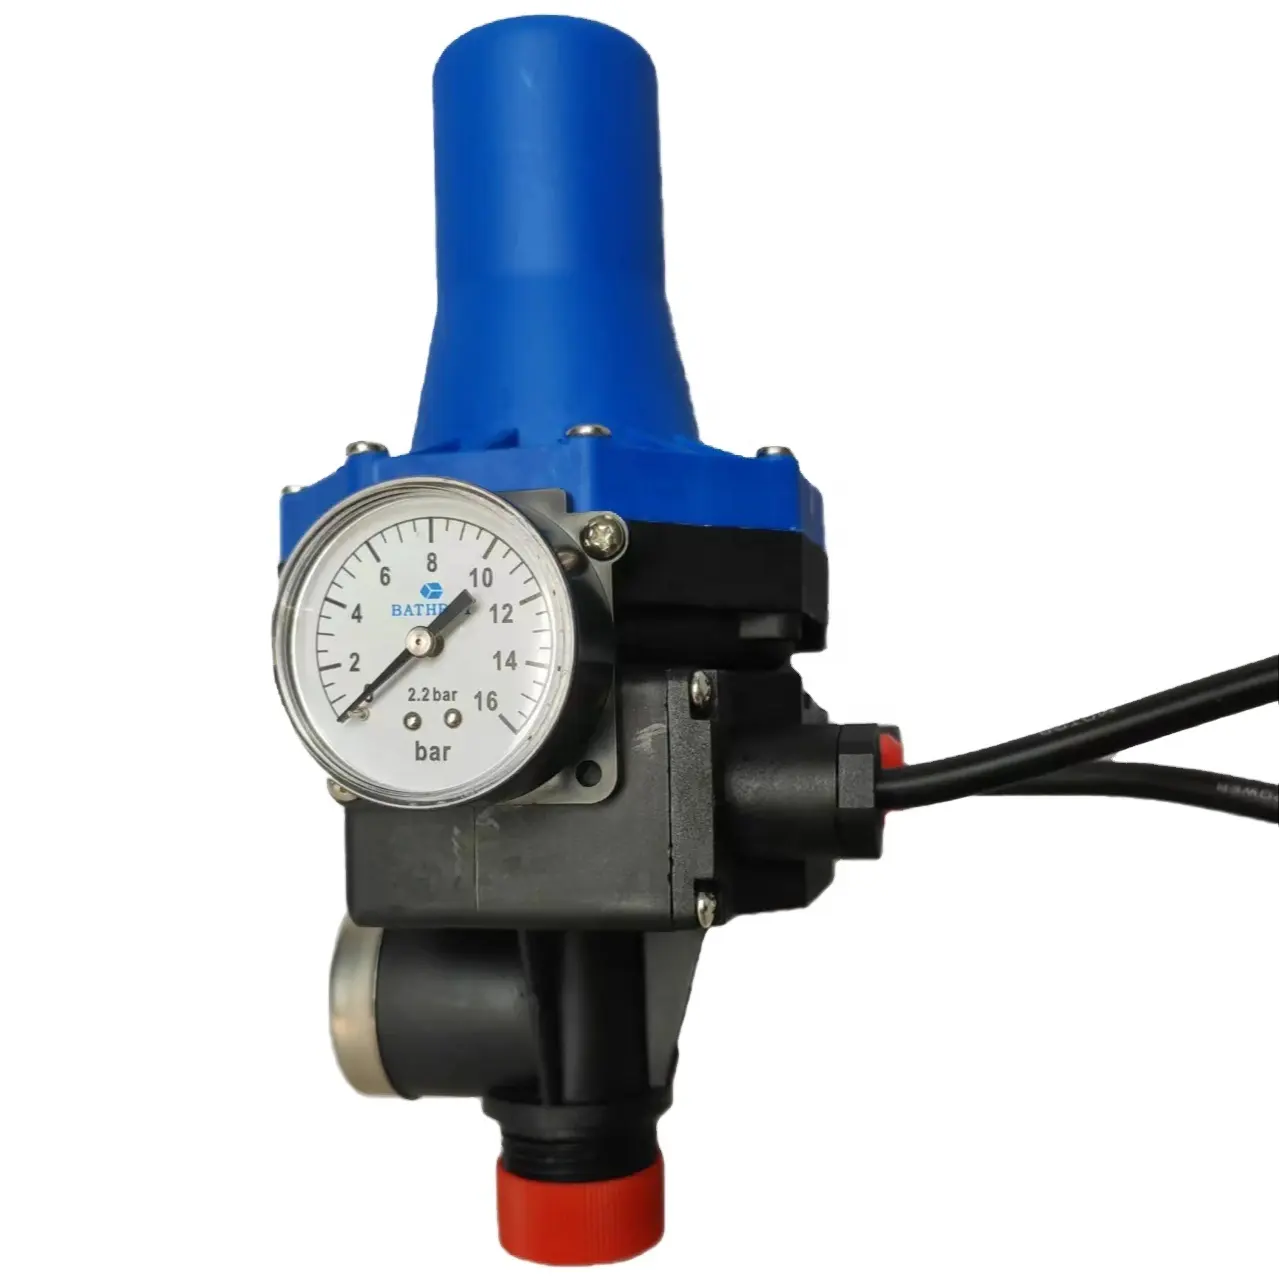 Intelligent water pump pressure controller